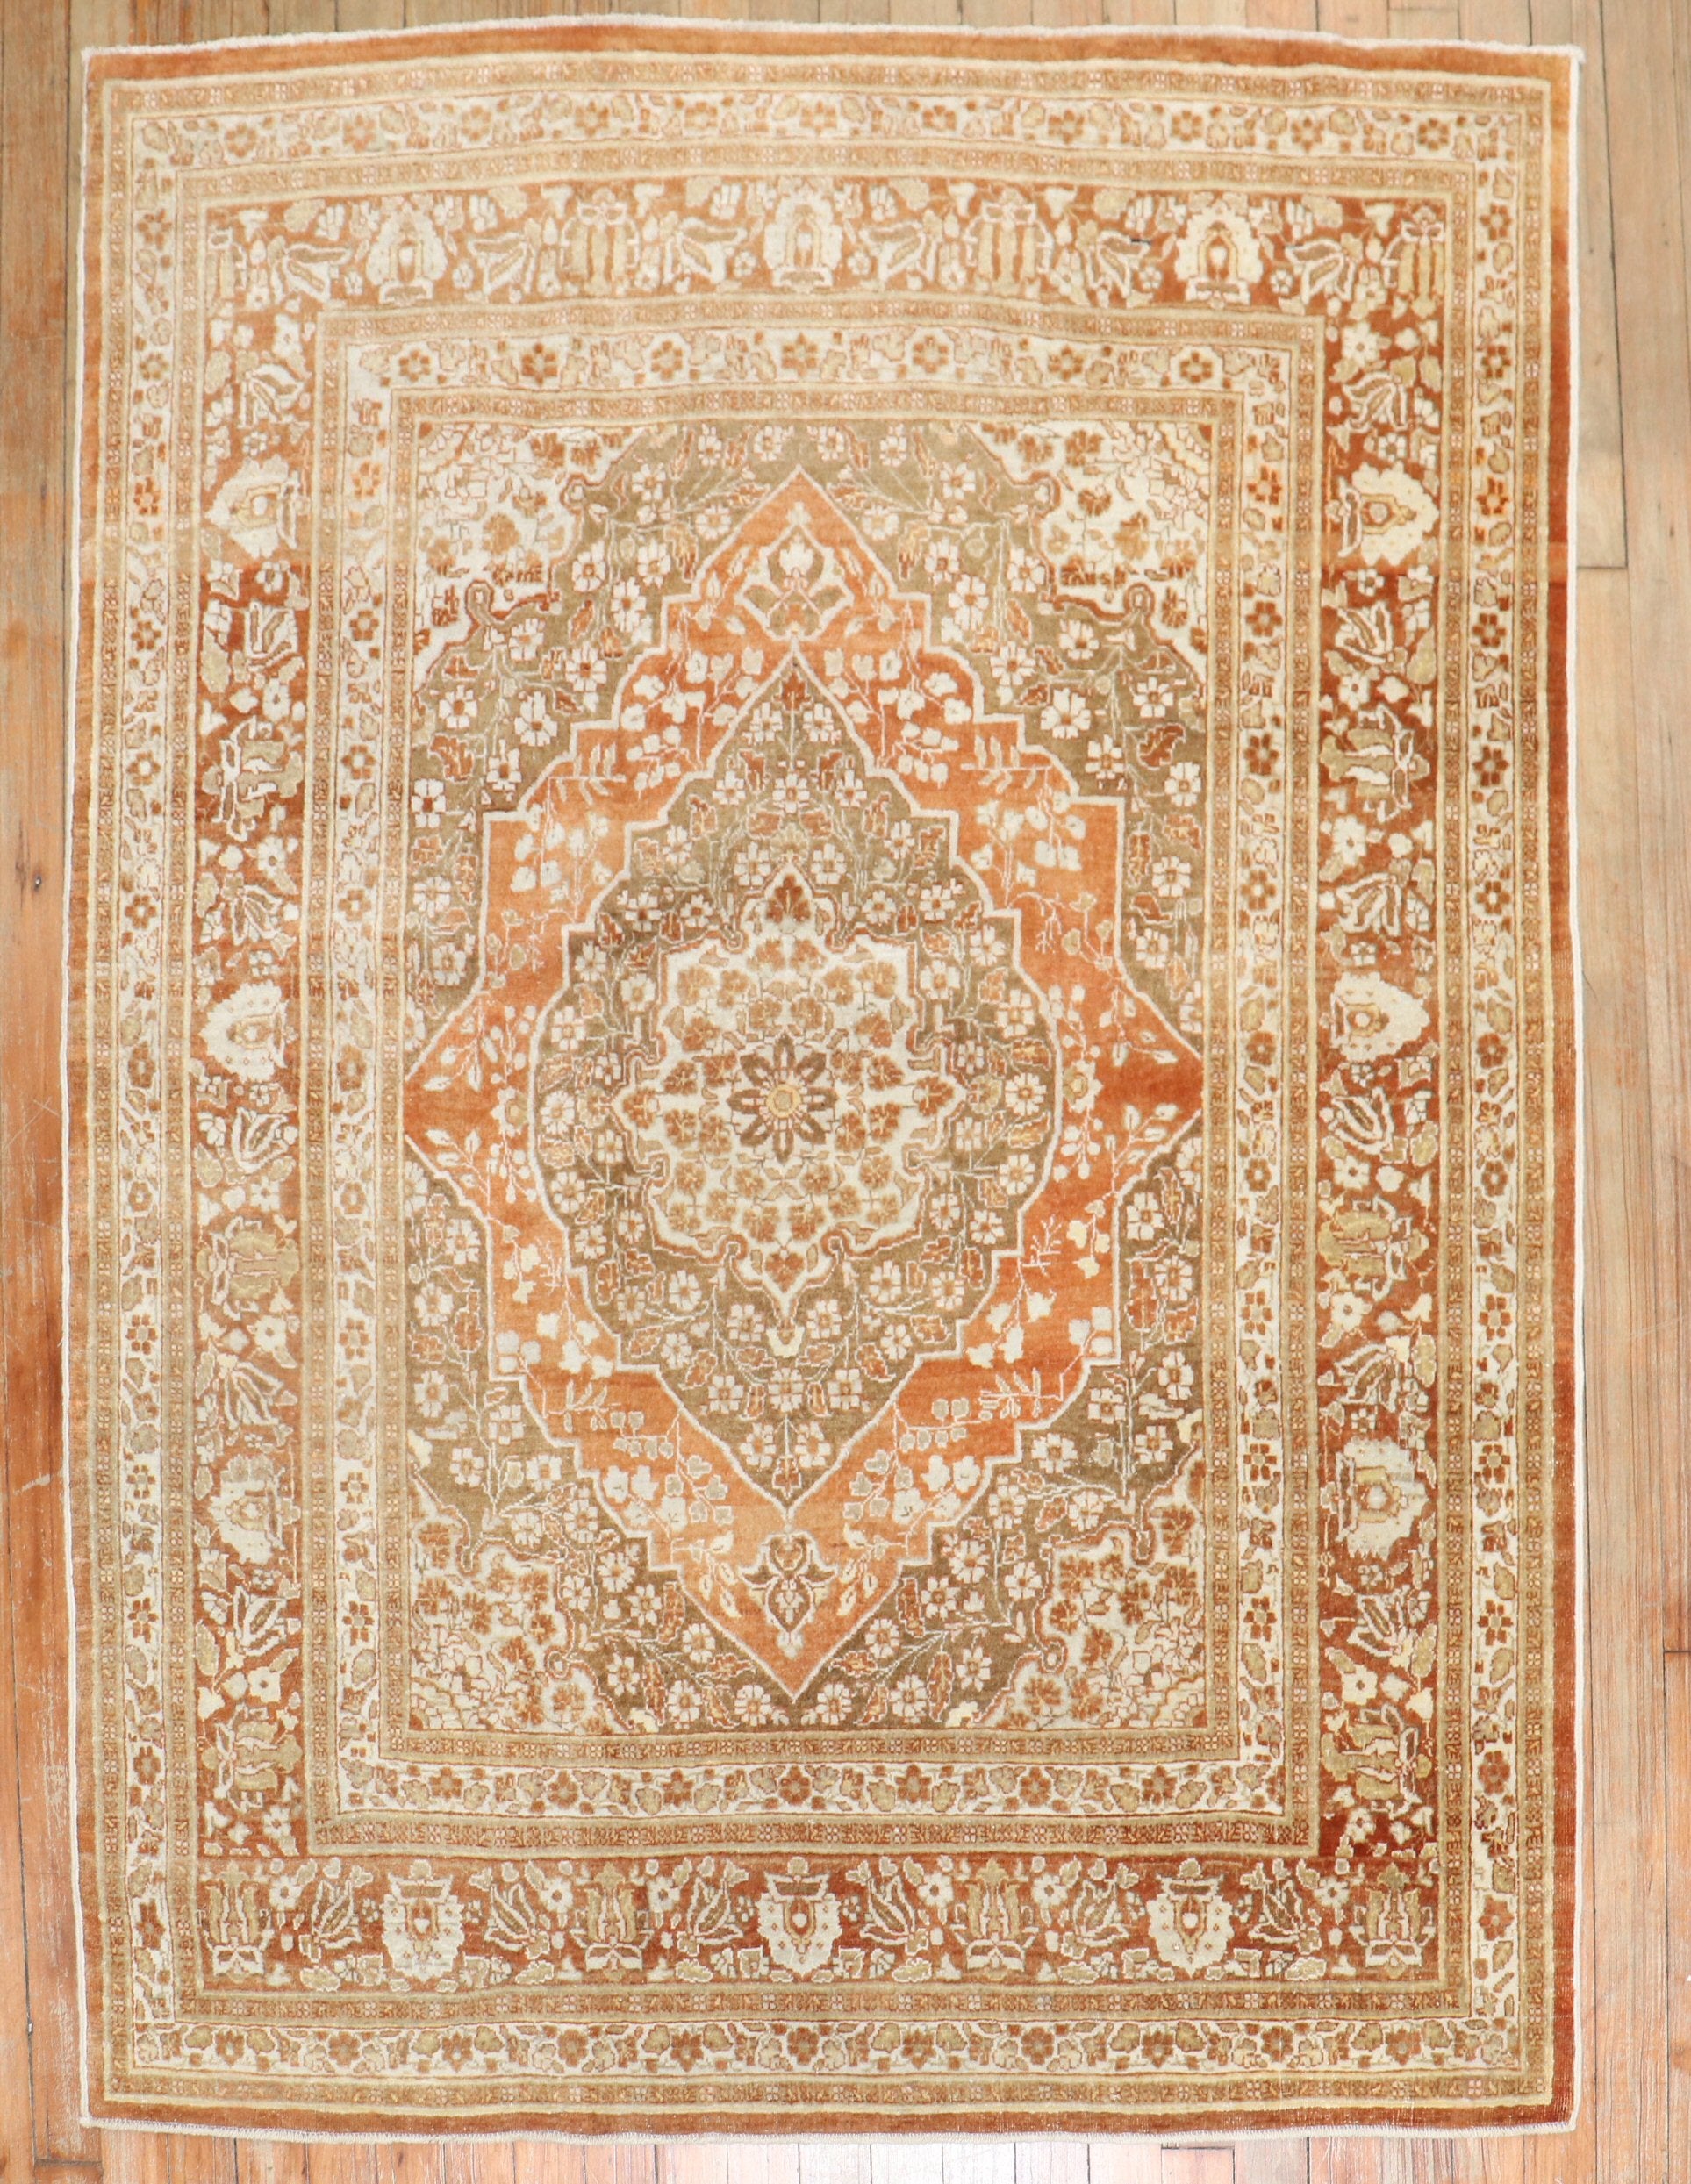 Tapis persan Tabriz antique de 1910 en mandarine et brun

Mesures : 4' x 5'5''.

